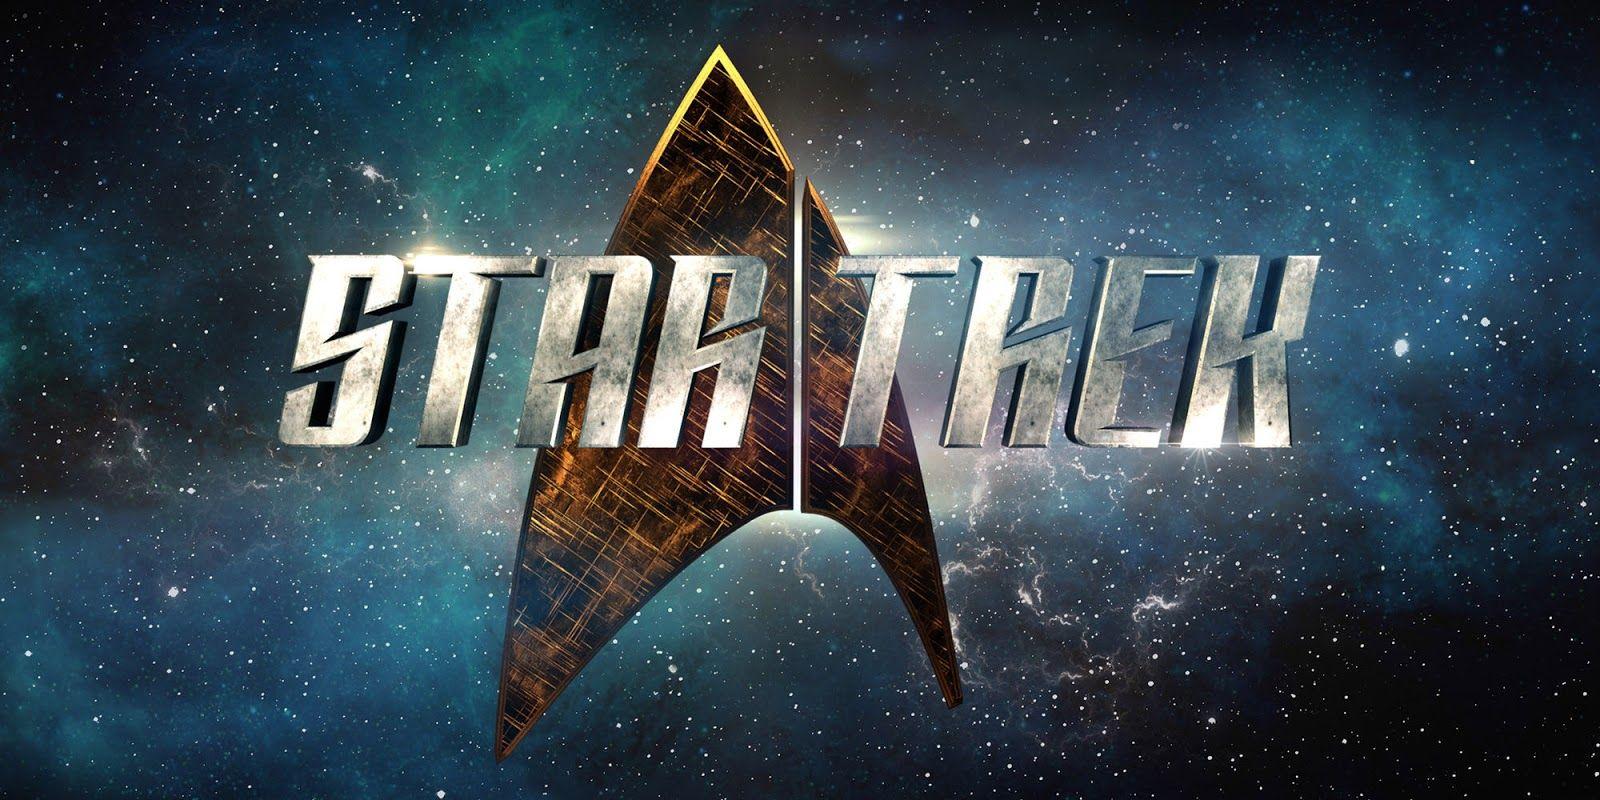 Star Trek Beyond HD Wallpaper for desktop download